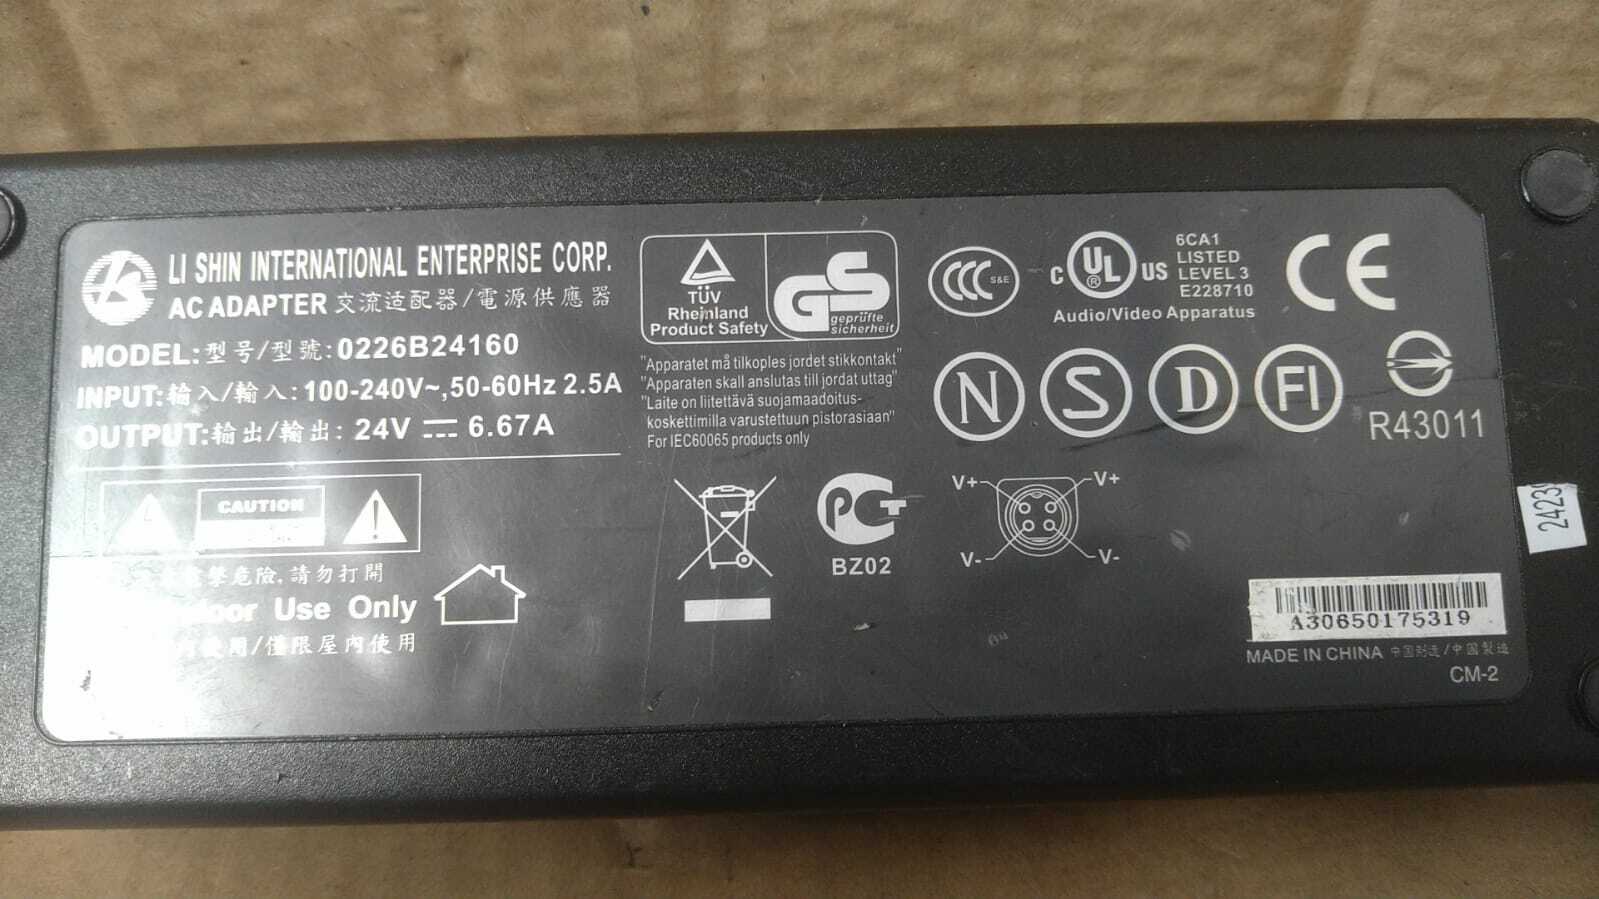 Genuine LI SHIN 0226B24160 - AC/DC ADAPTER 24V = 6.67A - Black Colour: Black Compatible Brand: Universal C - Click Image to Close